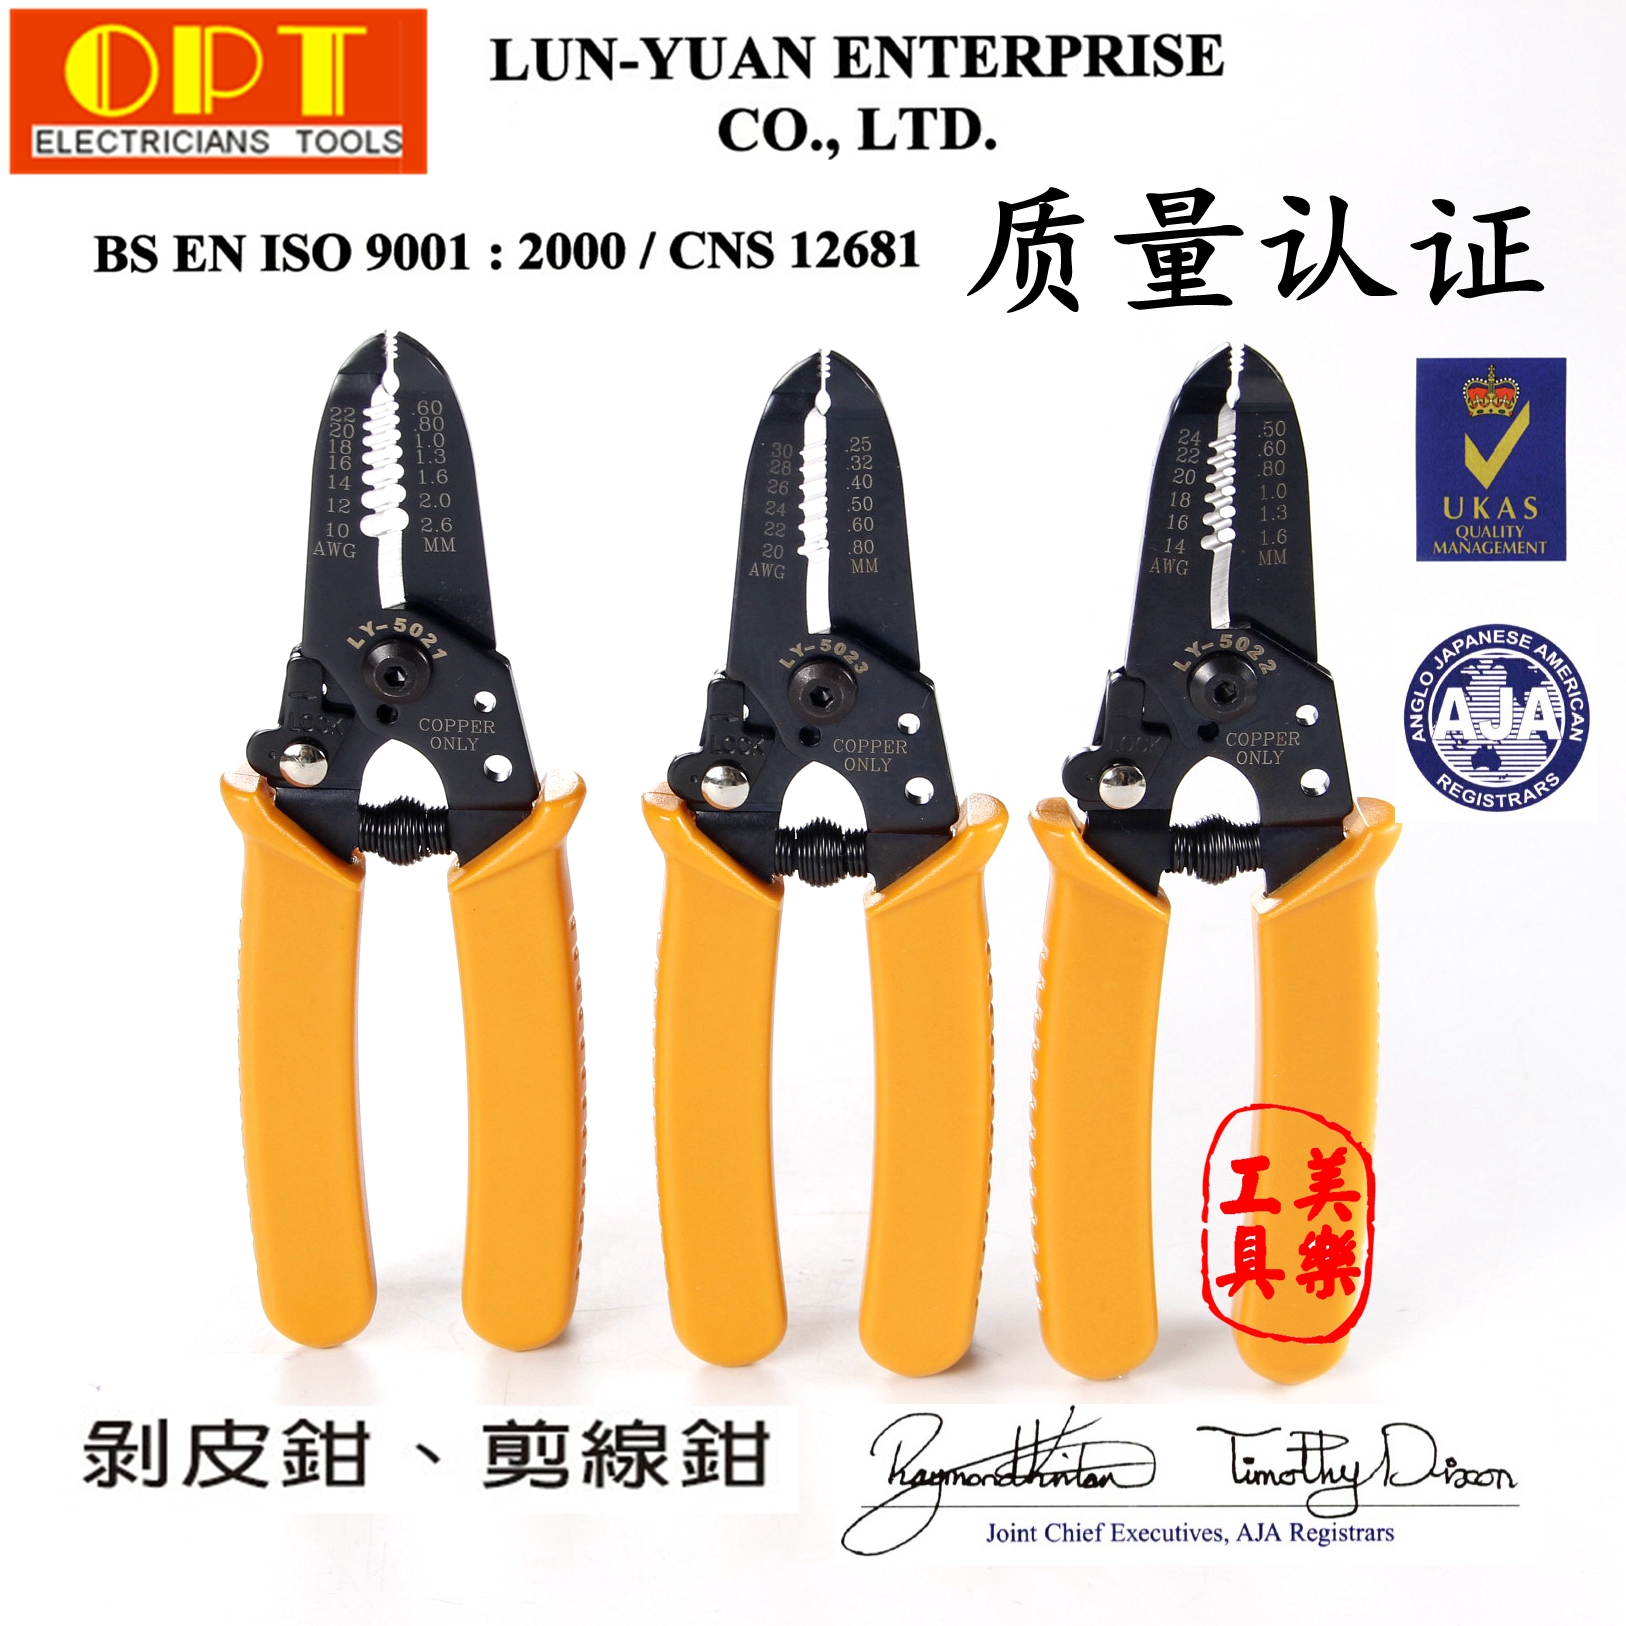 原装台湾OPT电力、电讯剥线钳 LY-5021 LY-5022 LY-5023